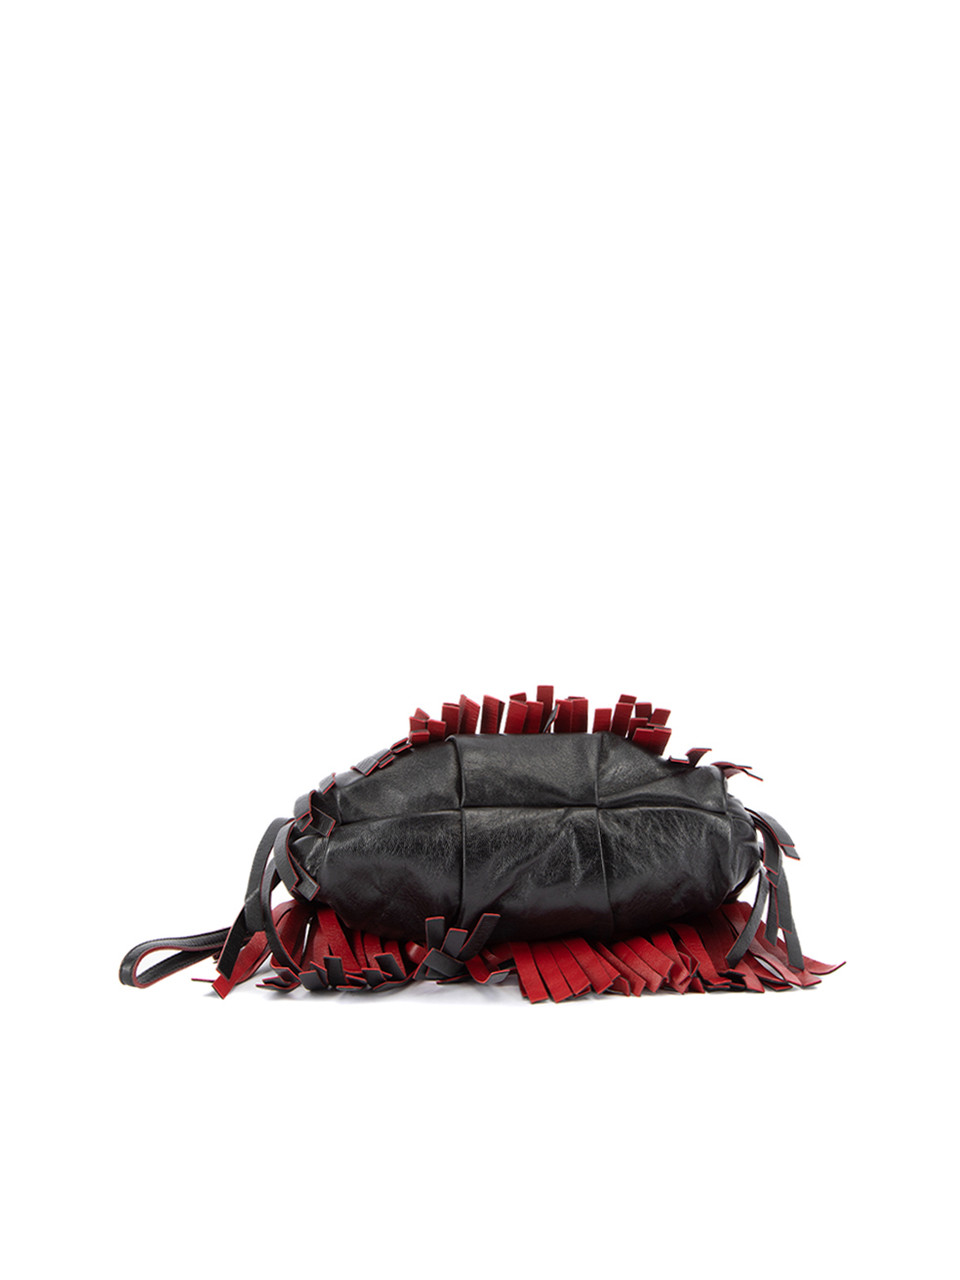 Prada Black Leather Contrast Red Fringe Clutch